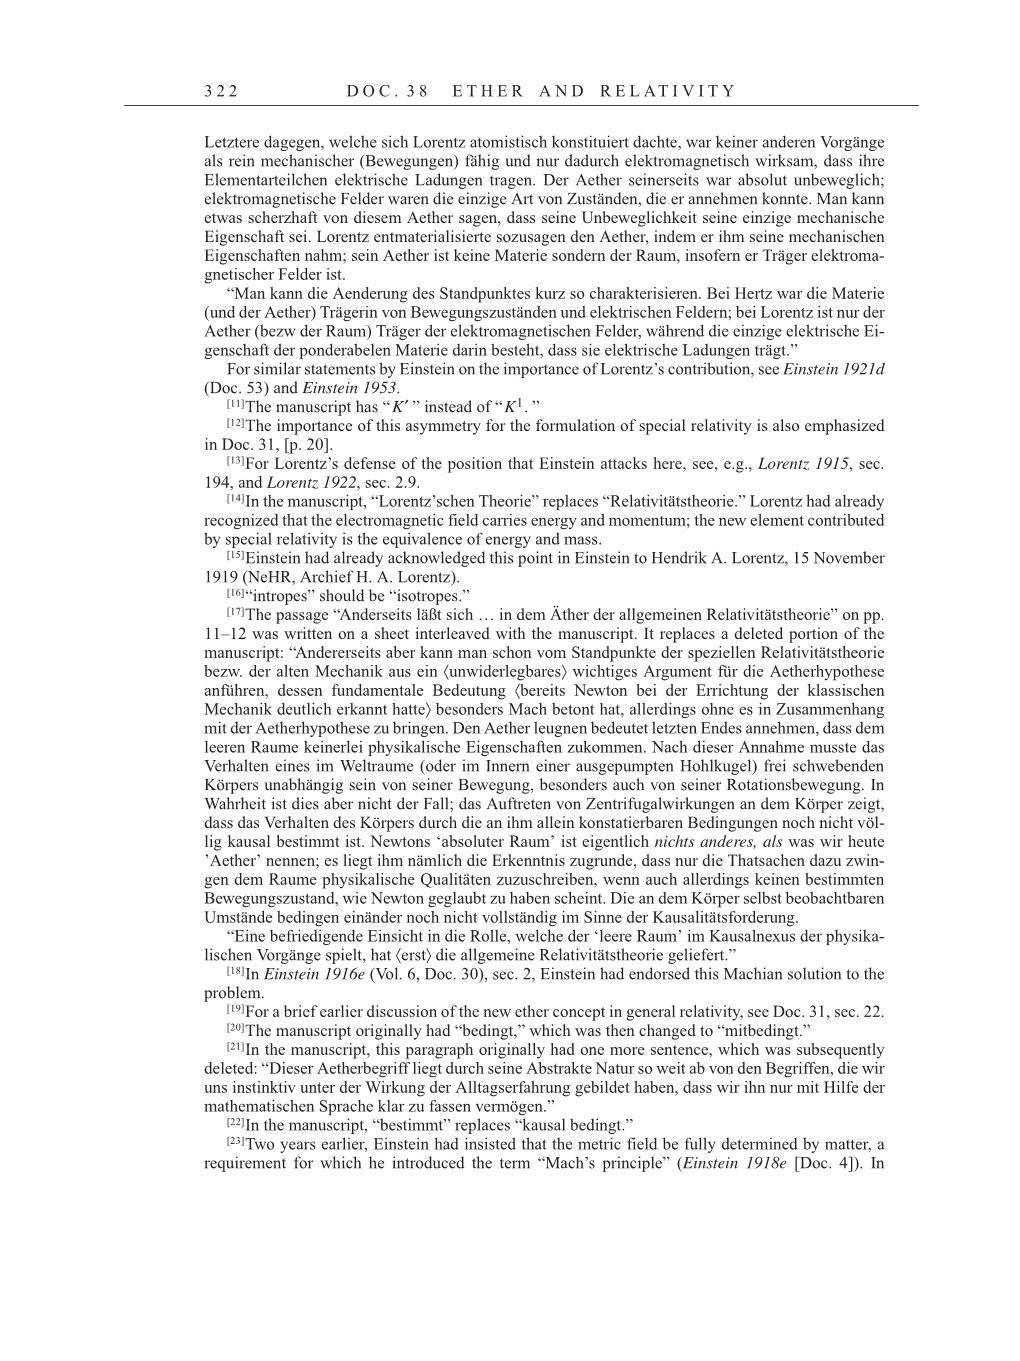 Volume 7: The Berlin Years: Writings, 1918-1921 page 322